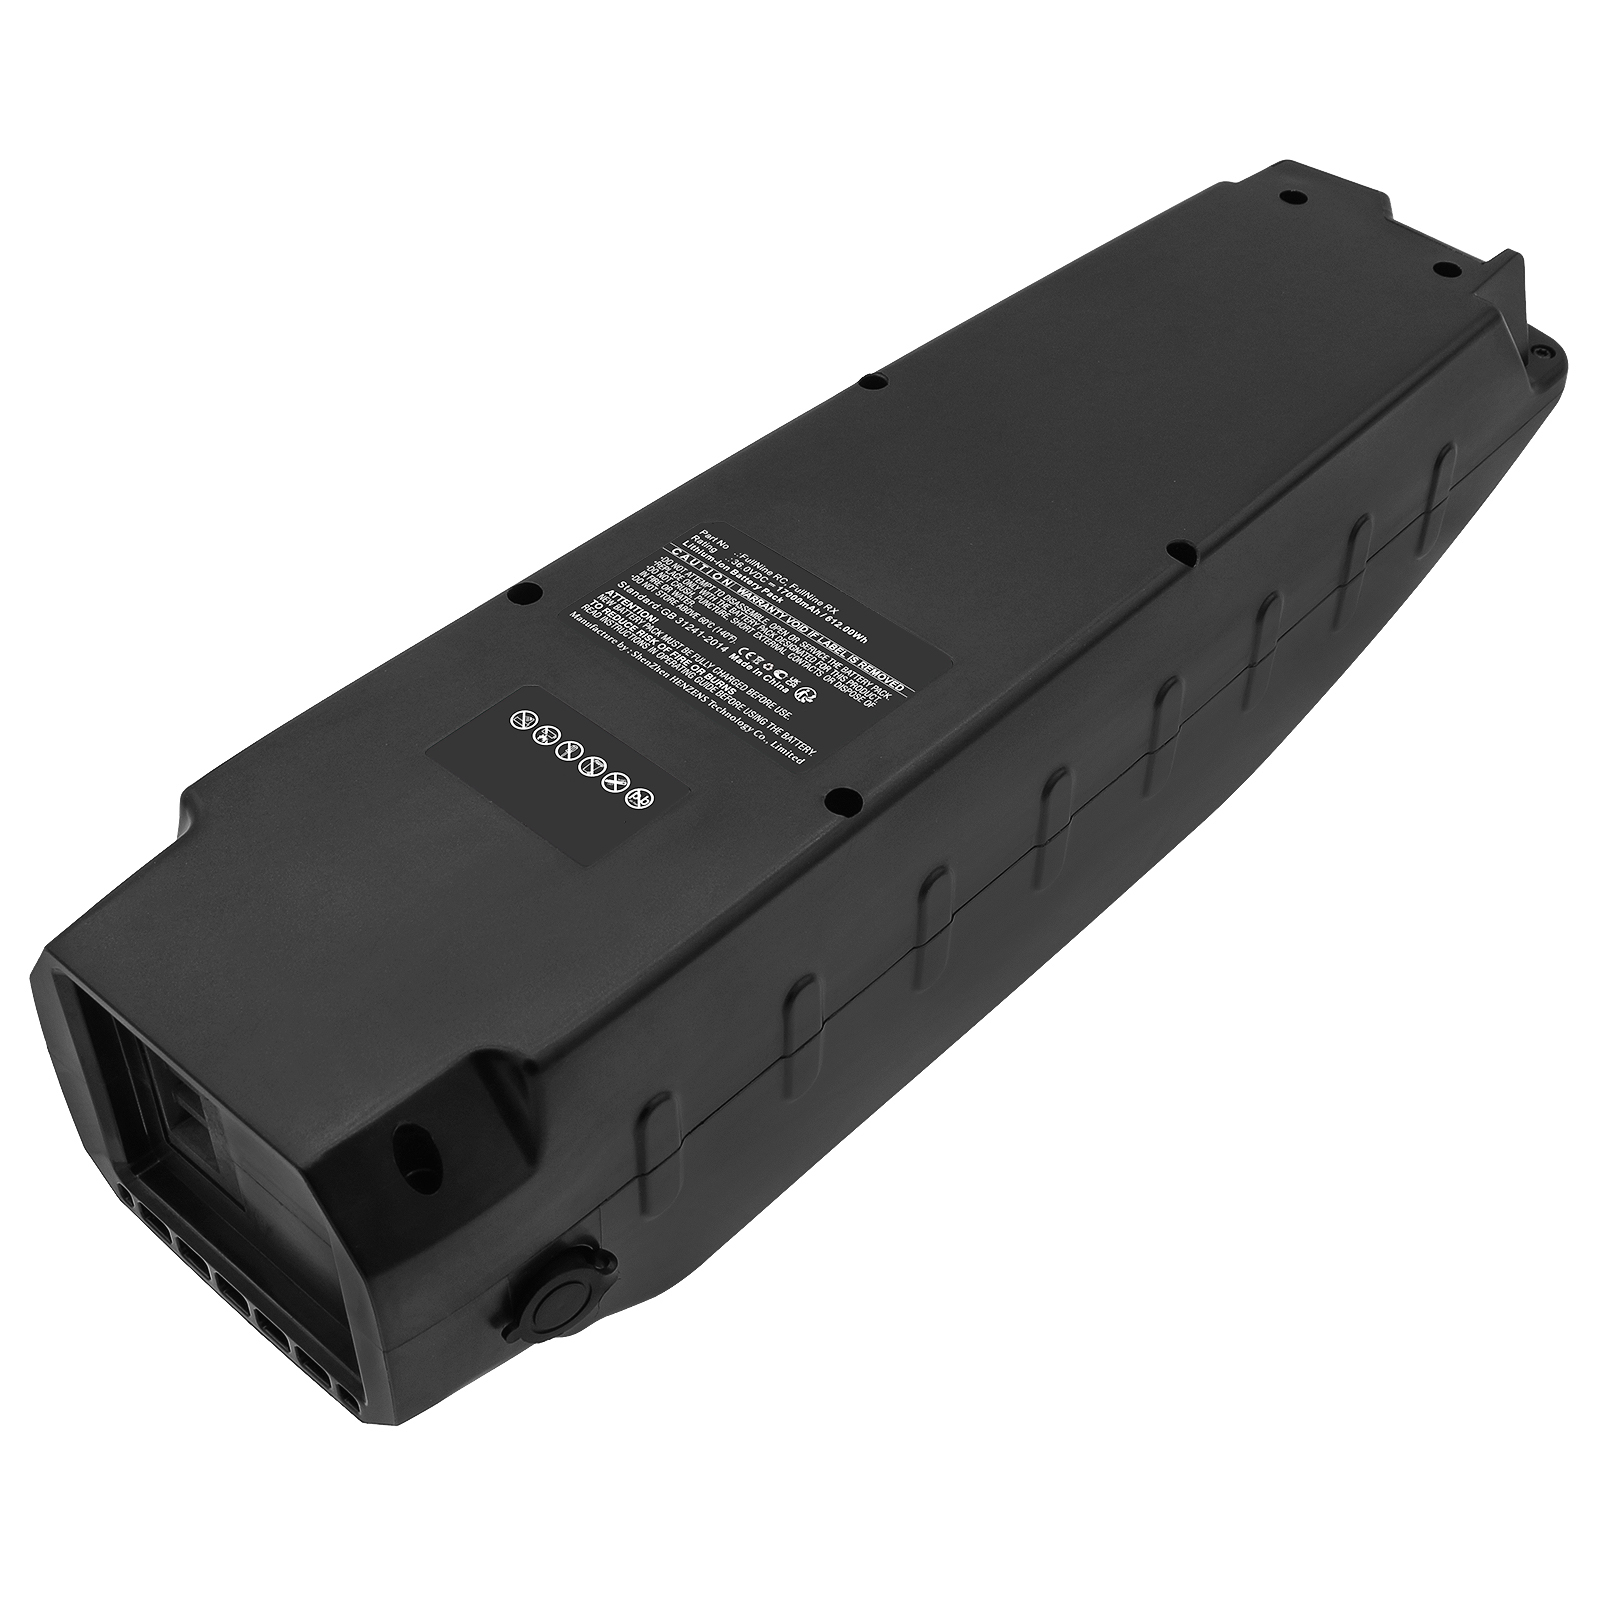 Synergy Digital Electric eBike Battery, Compatible with Haibike FullNine RC Electric eBike Battery (Li-ion, 36V, 17000mAh)